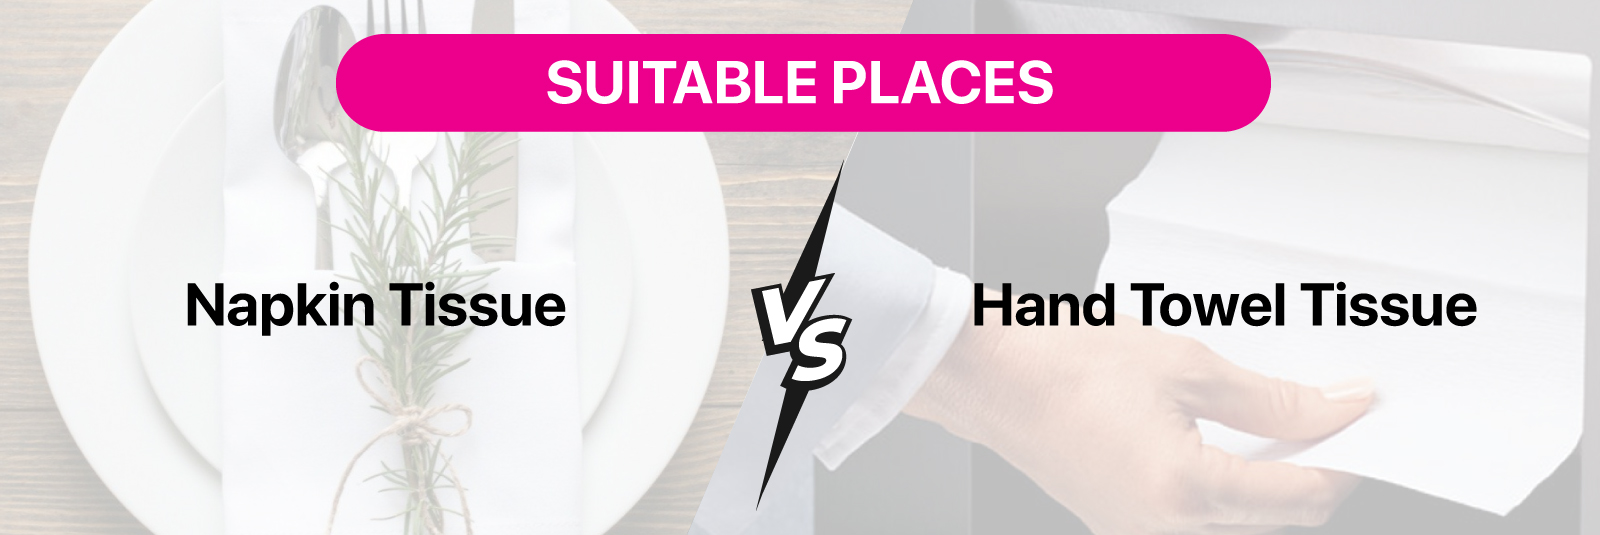 Suitable Places - Napkin Tissue vs Hand Towel Tissue